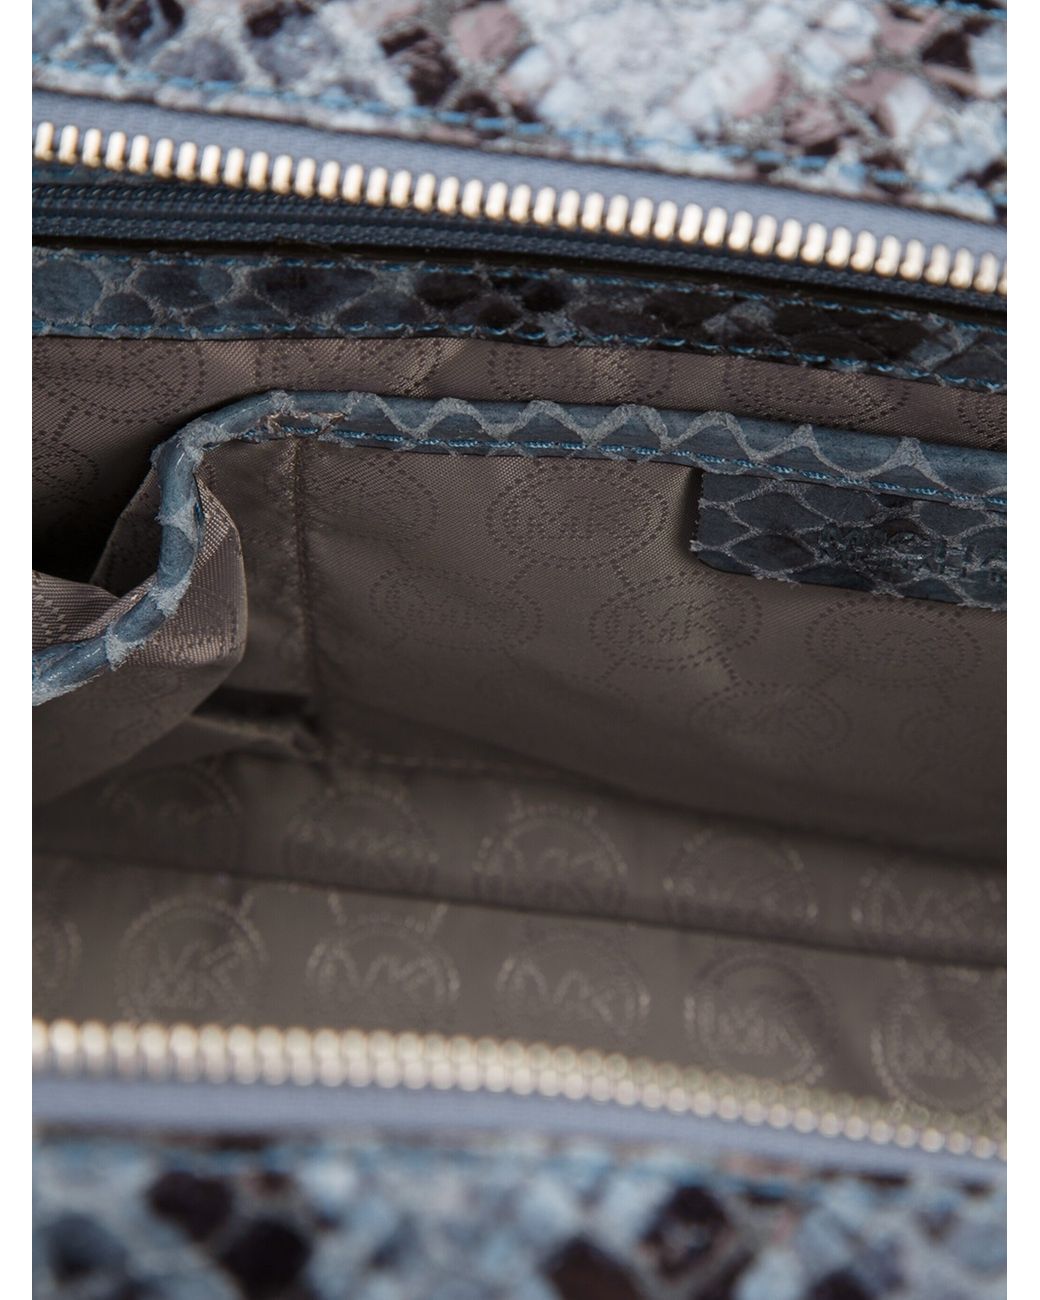 Michael Kors Snake Print Handbags | Mercari